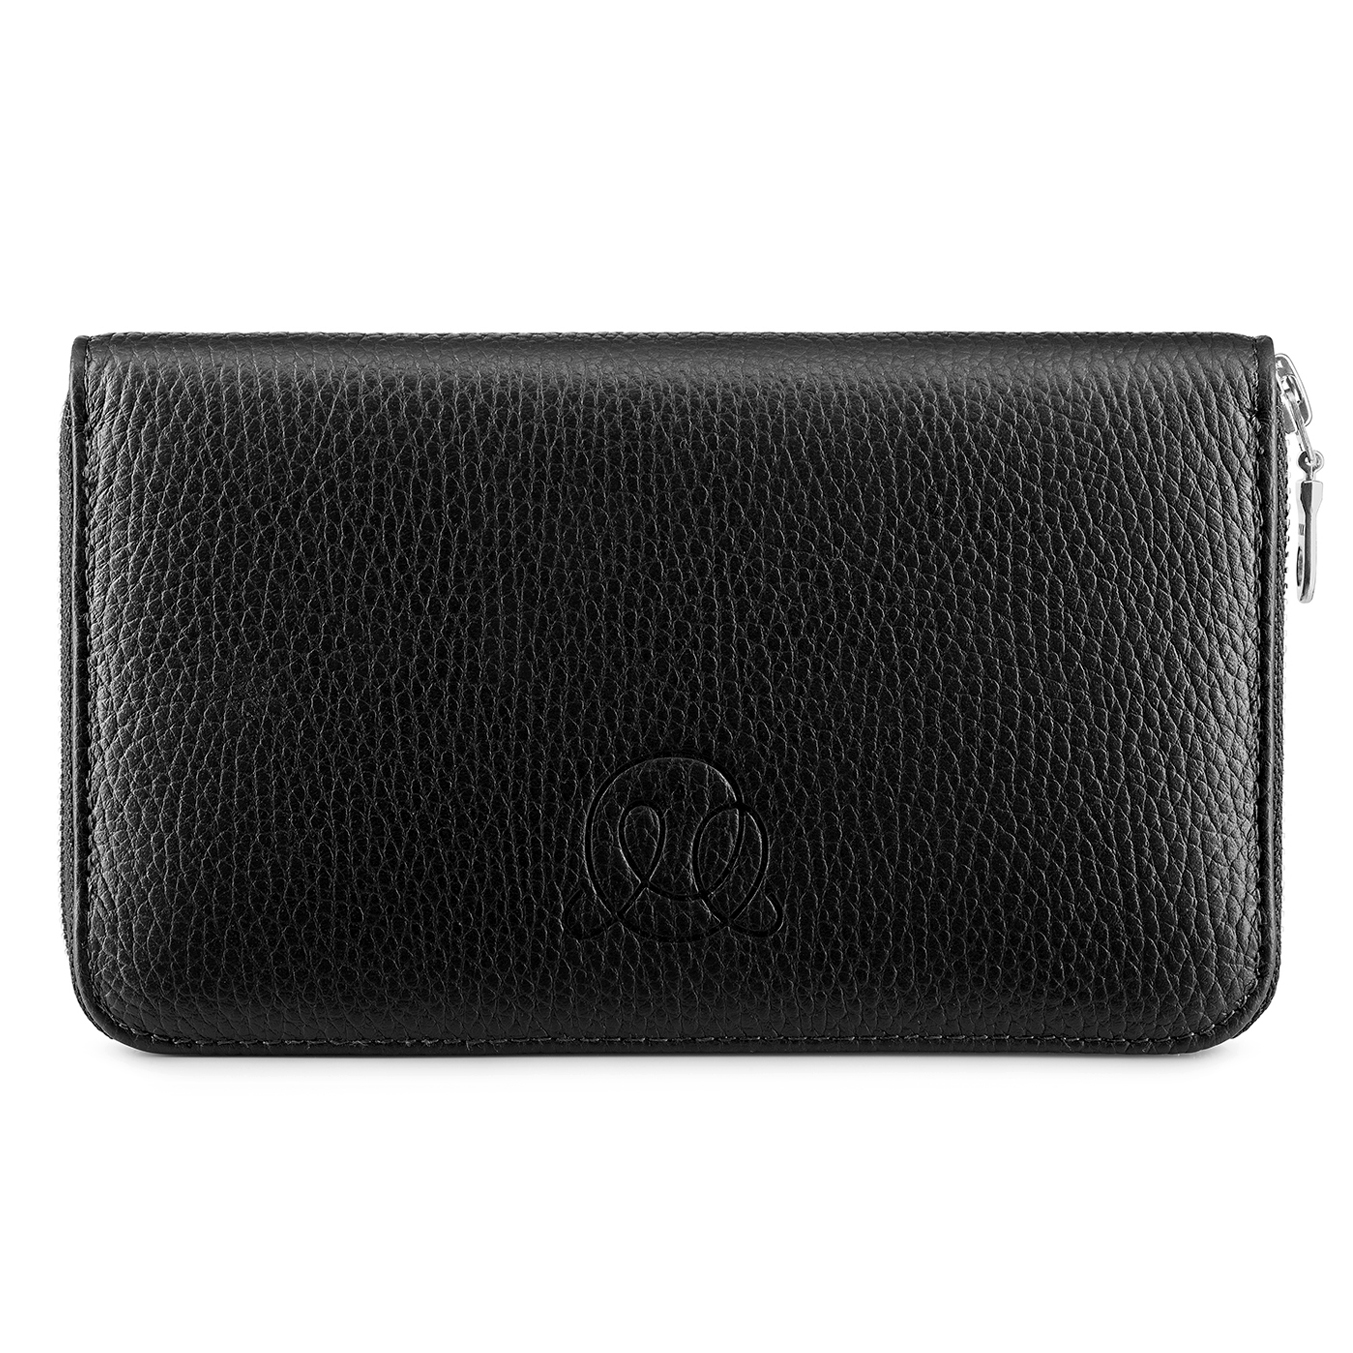 IDA wallet - black